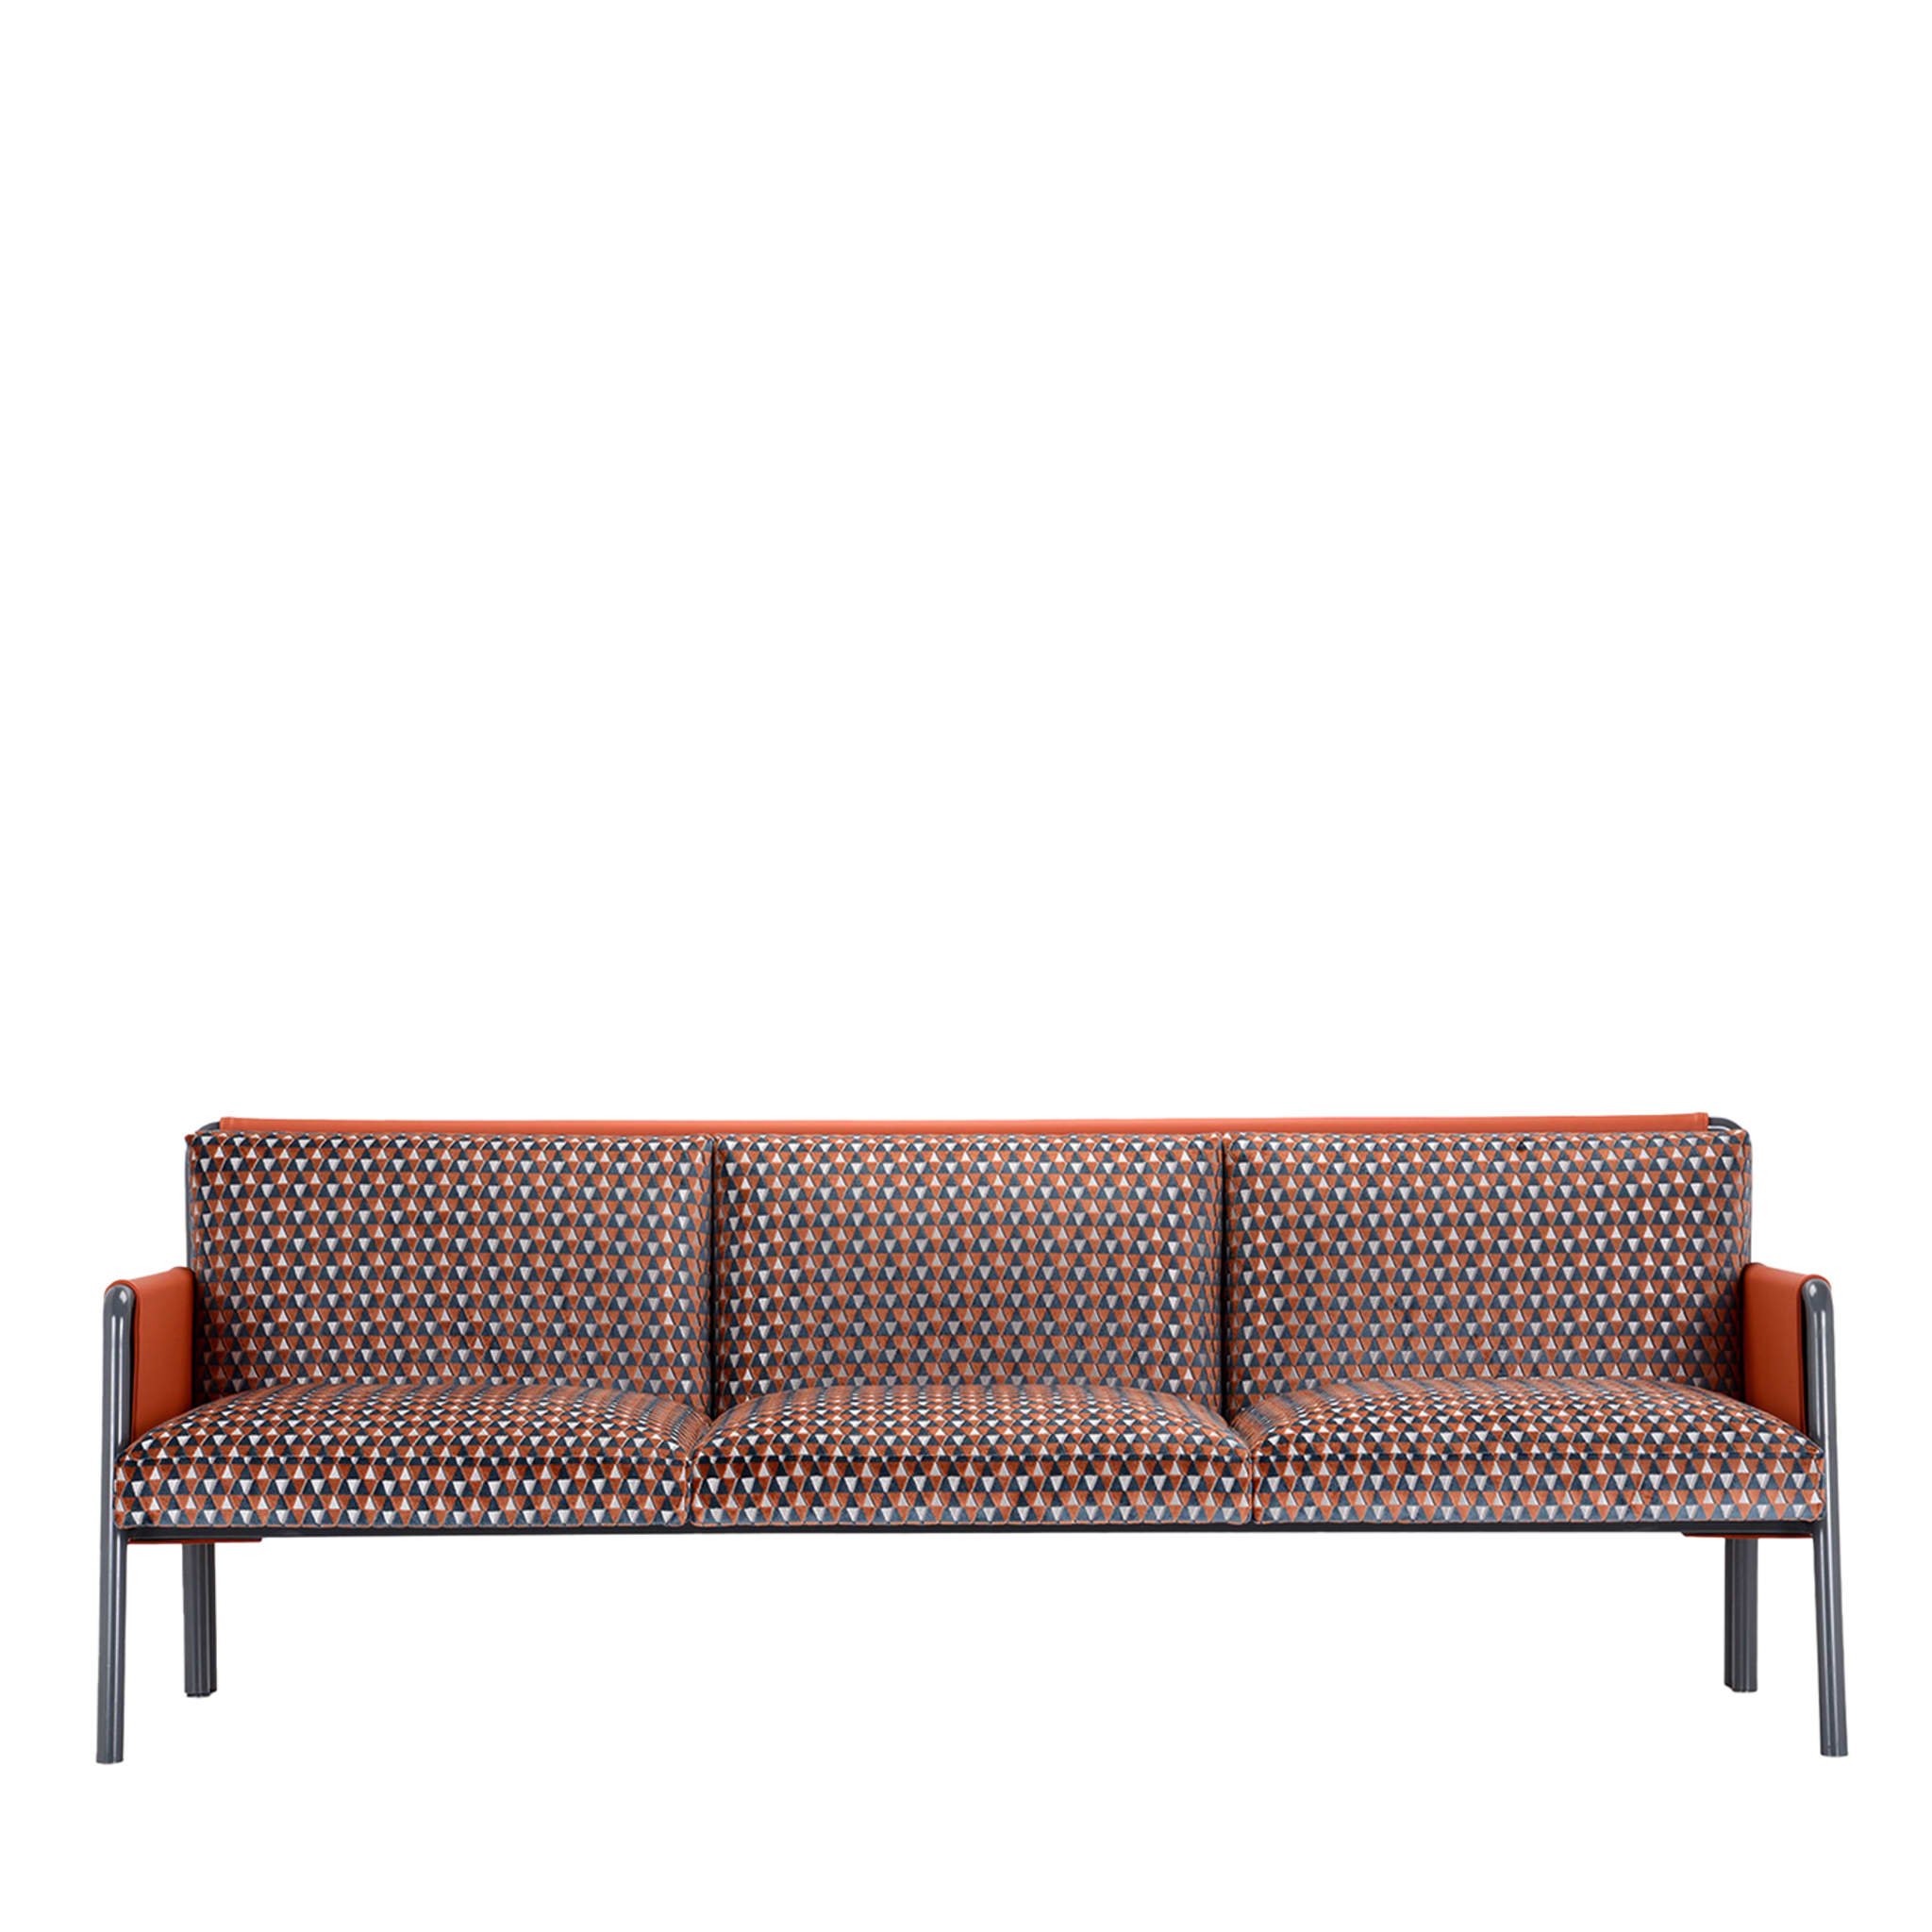 Swing 3-Seater Patterned Orange & Gray Sofa by Debonademeo - Main view